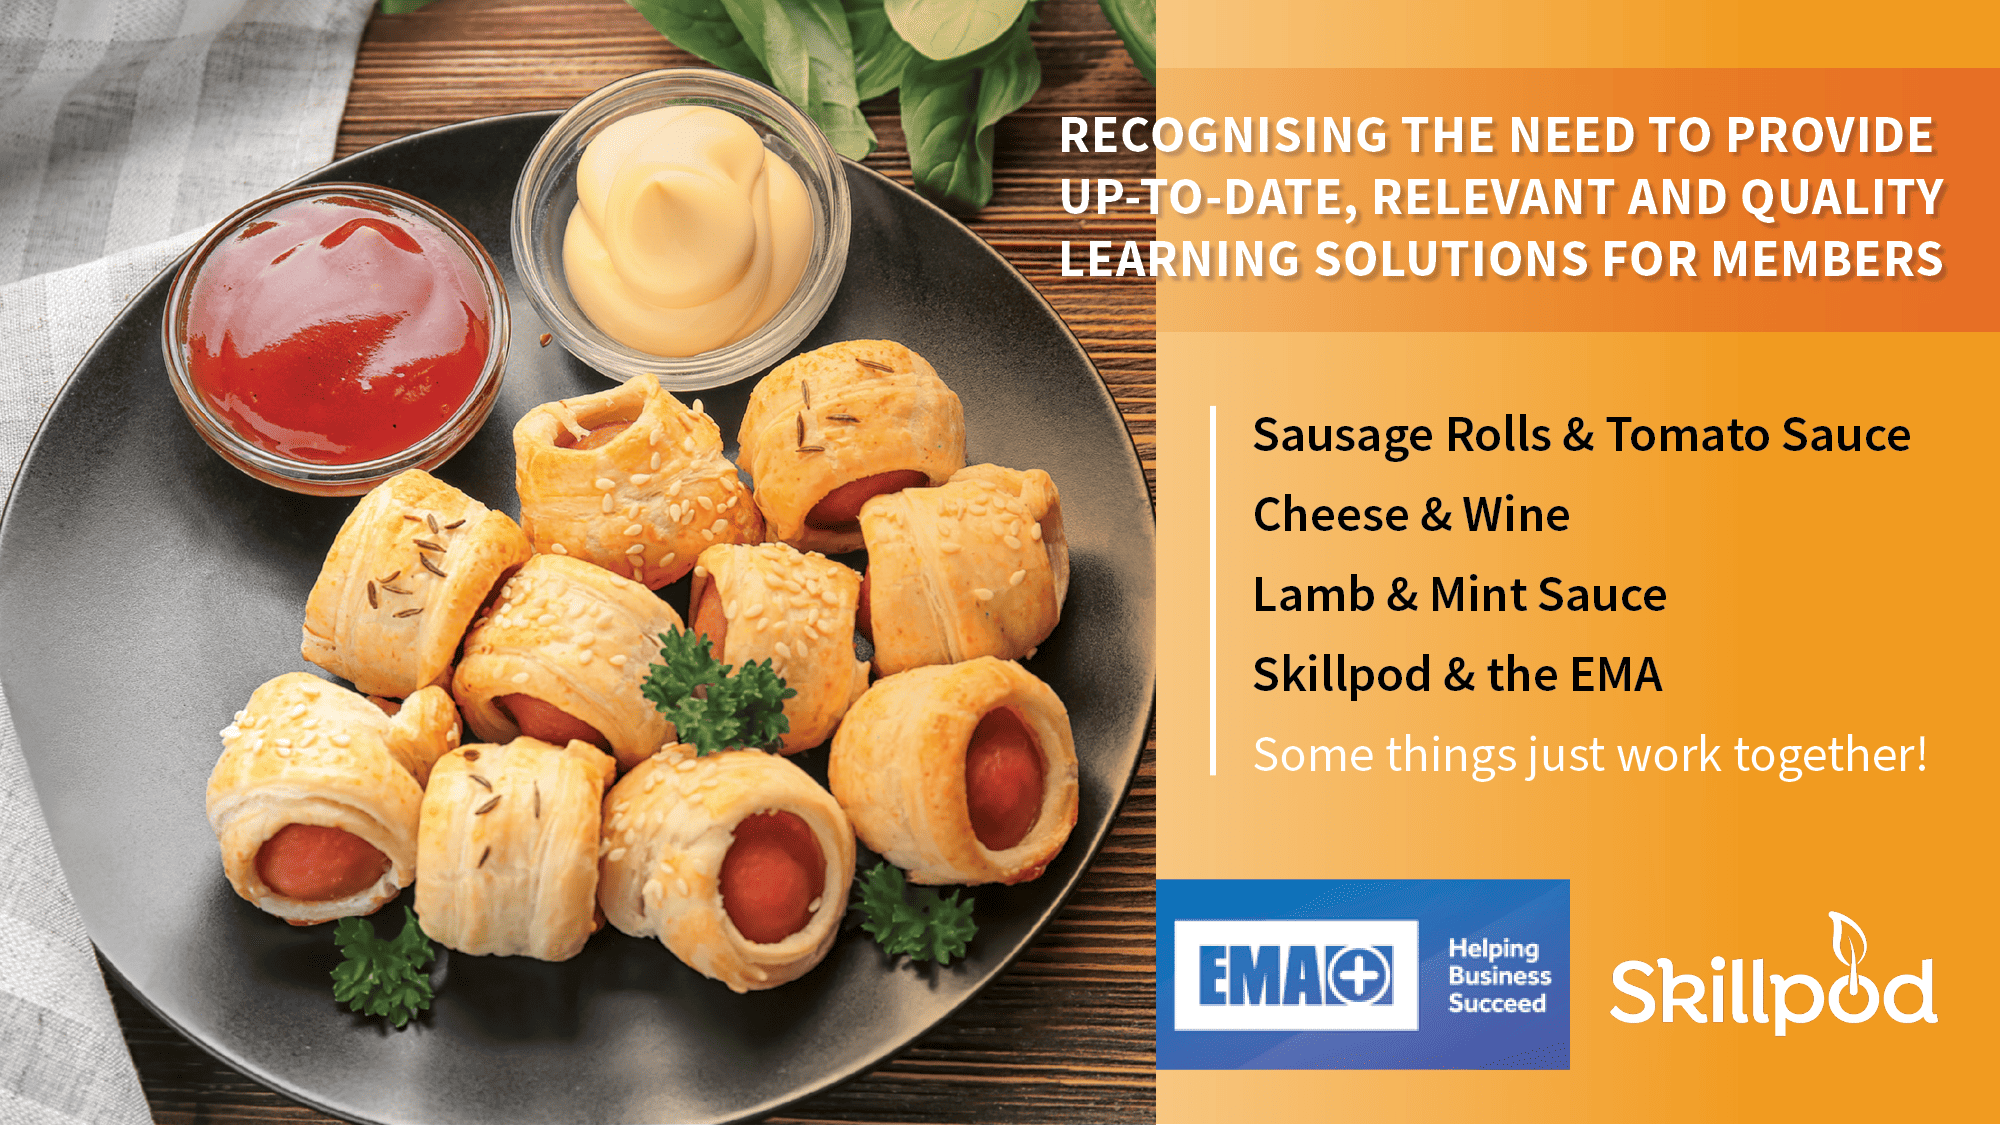 Sausage rolls, the EMA and Skillpod. 